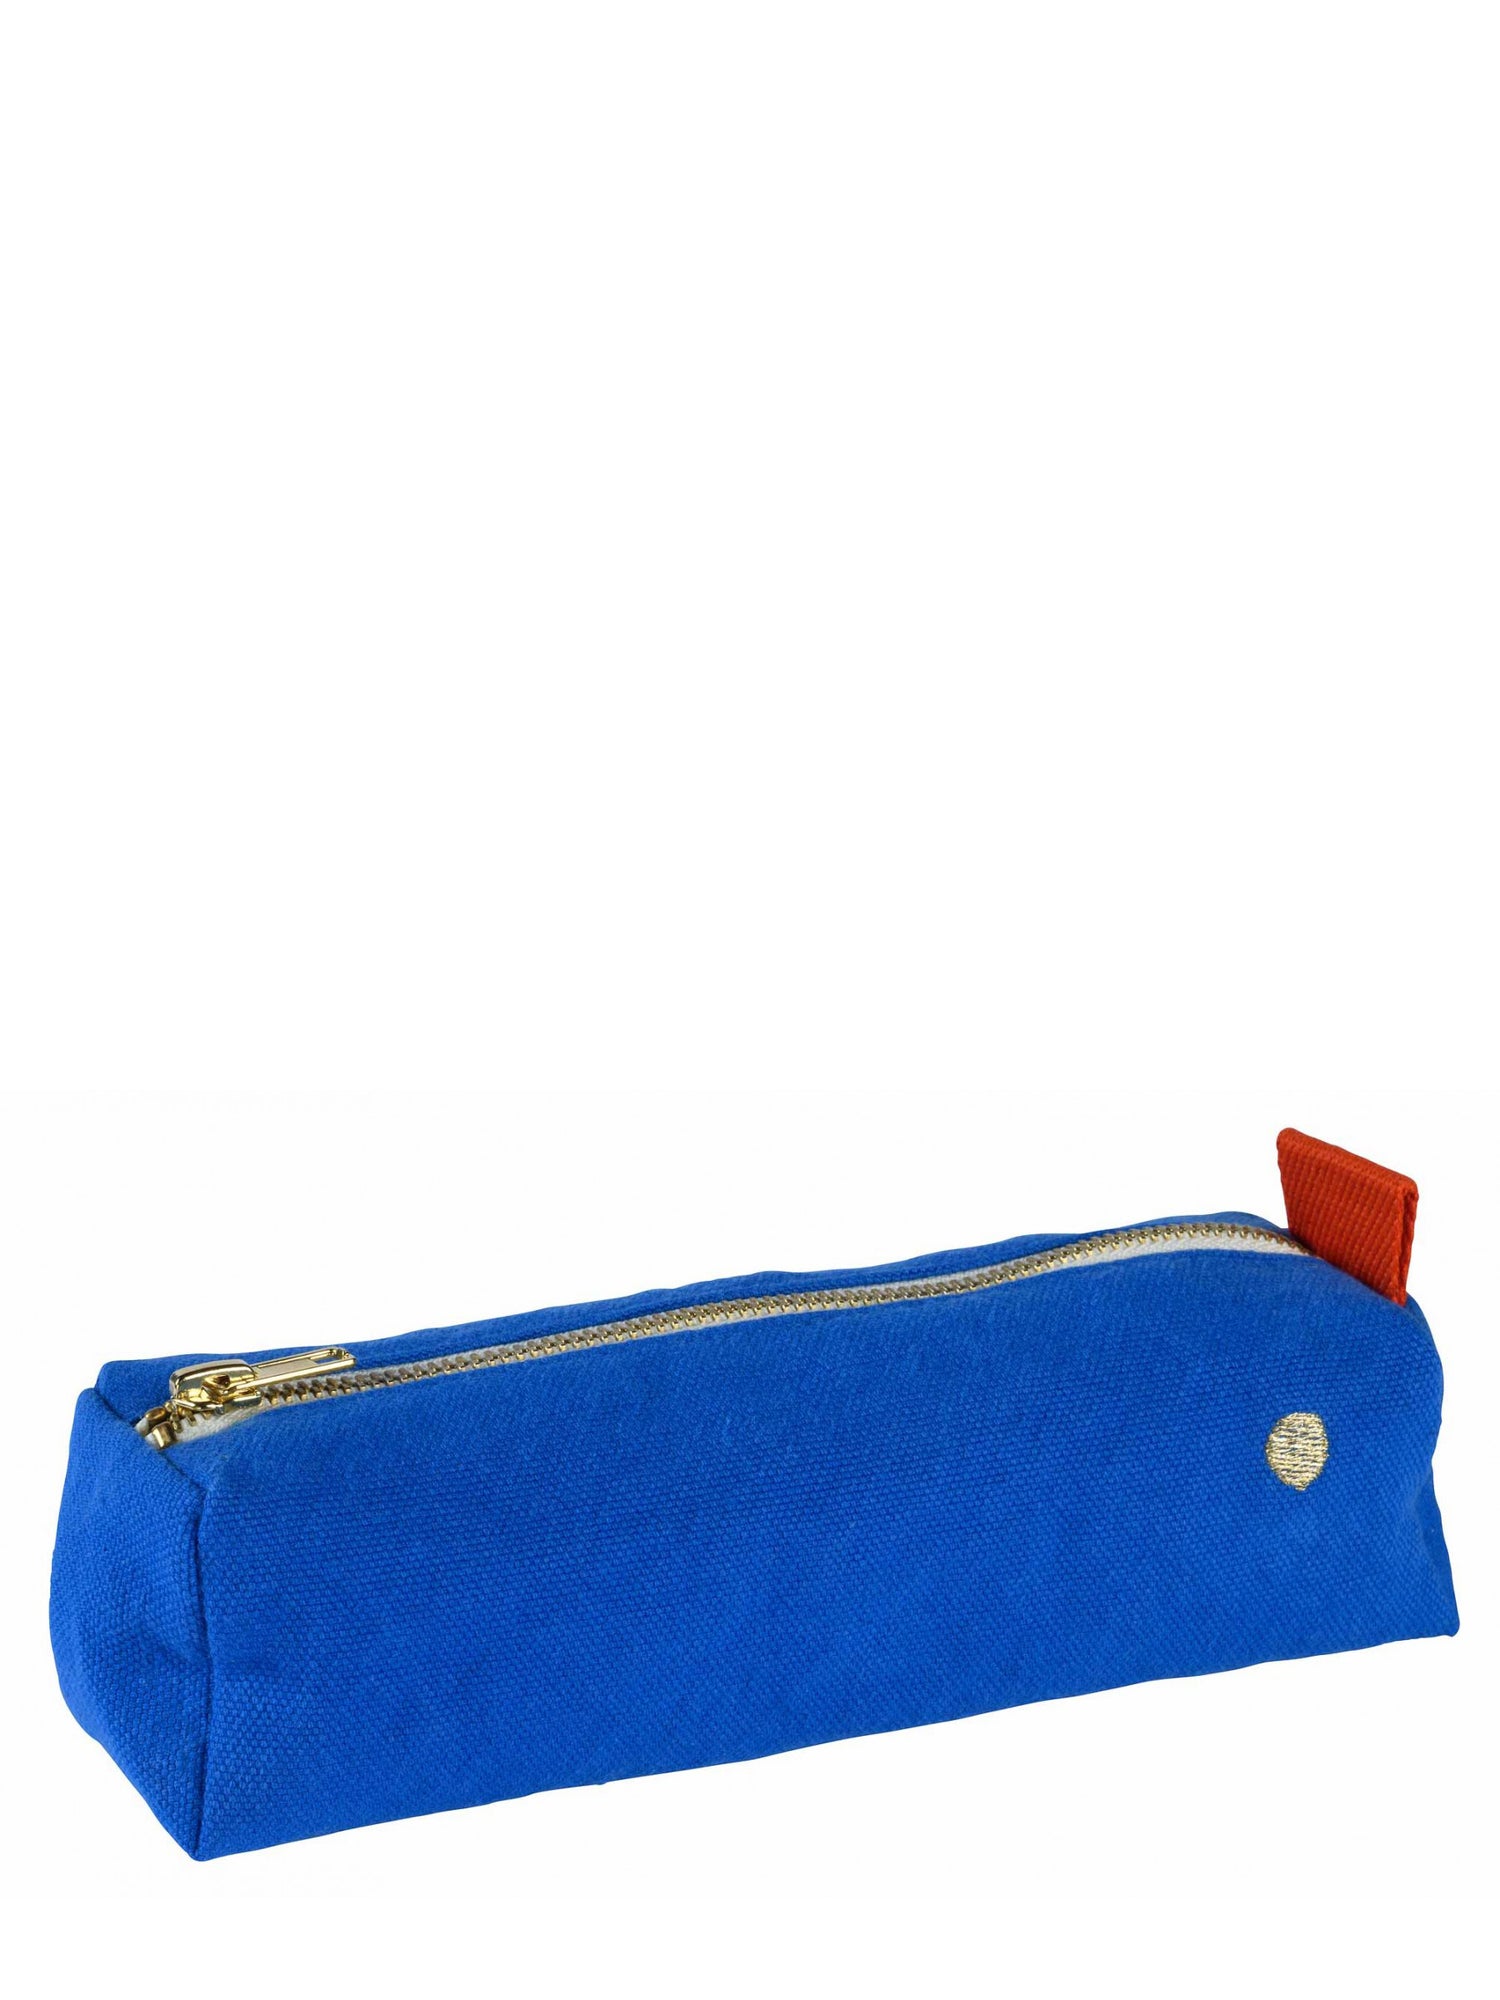 Cotton pencil case IONA, blue